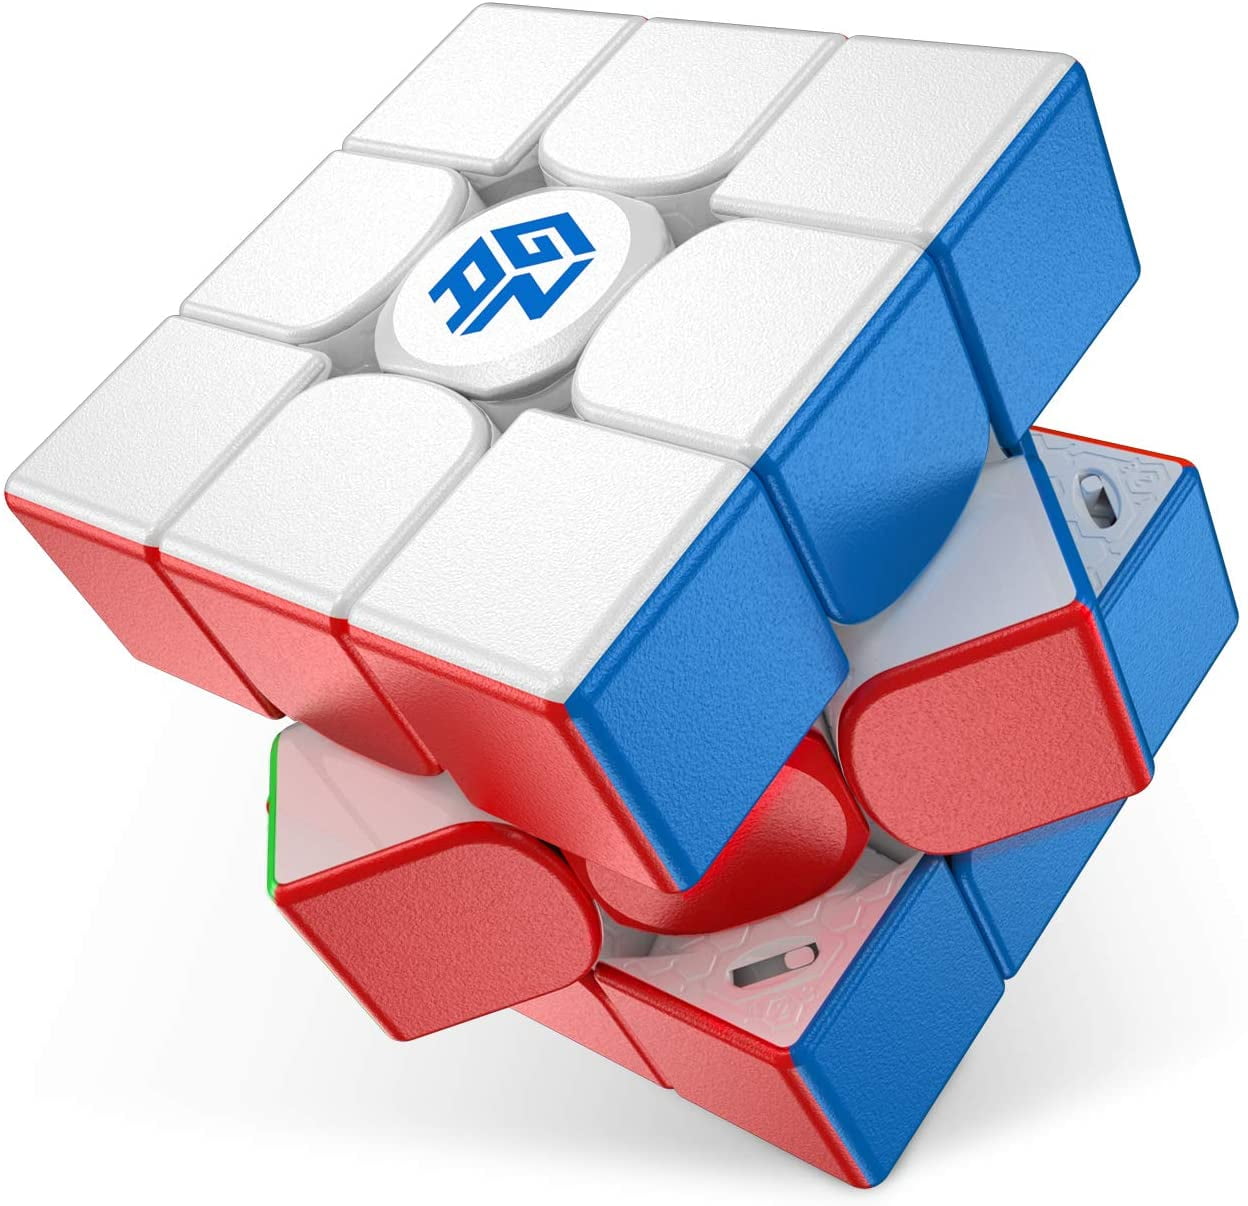 2020 GAN RSC Super Speed Cube  2x2 3x3x3 Magic Cube Twist Puzzle Toys Gift Black 